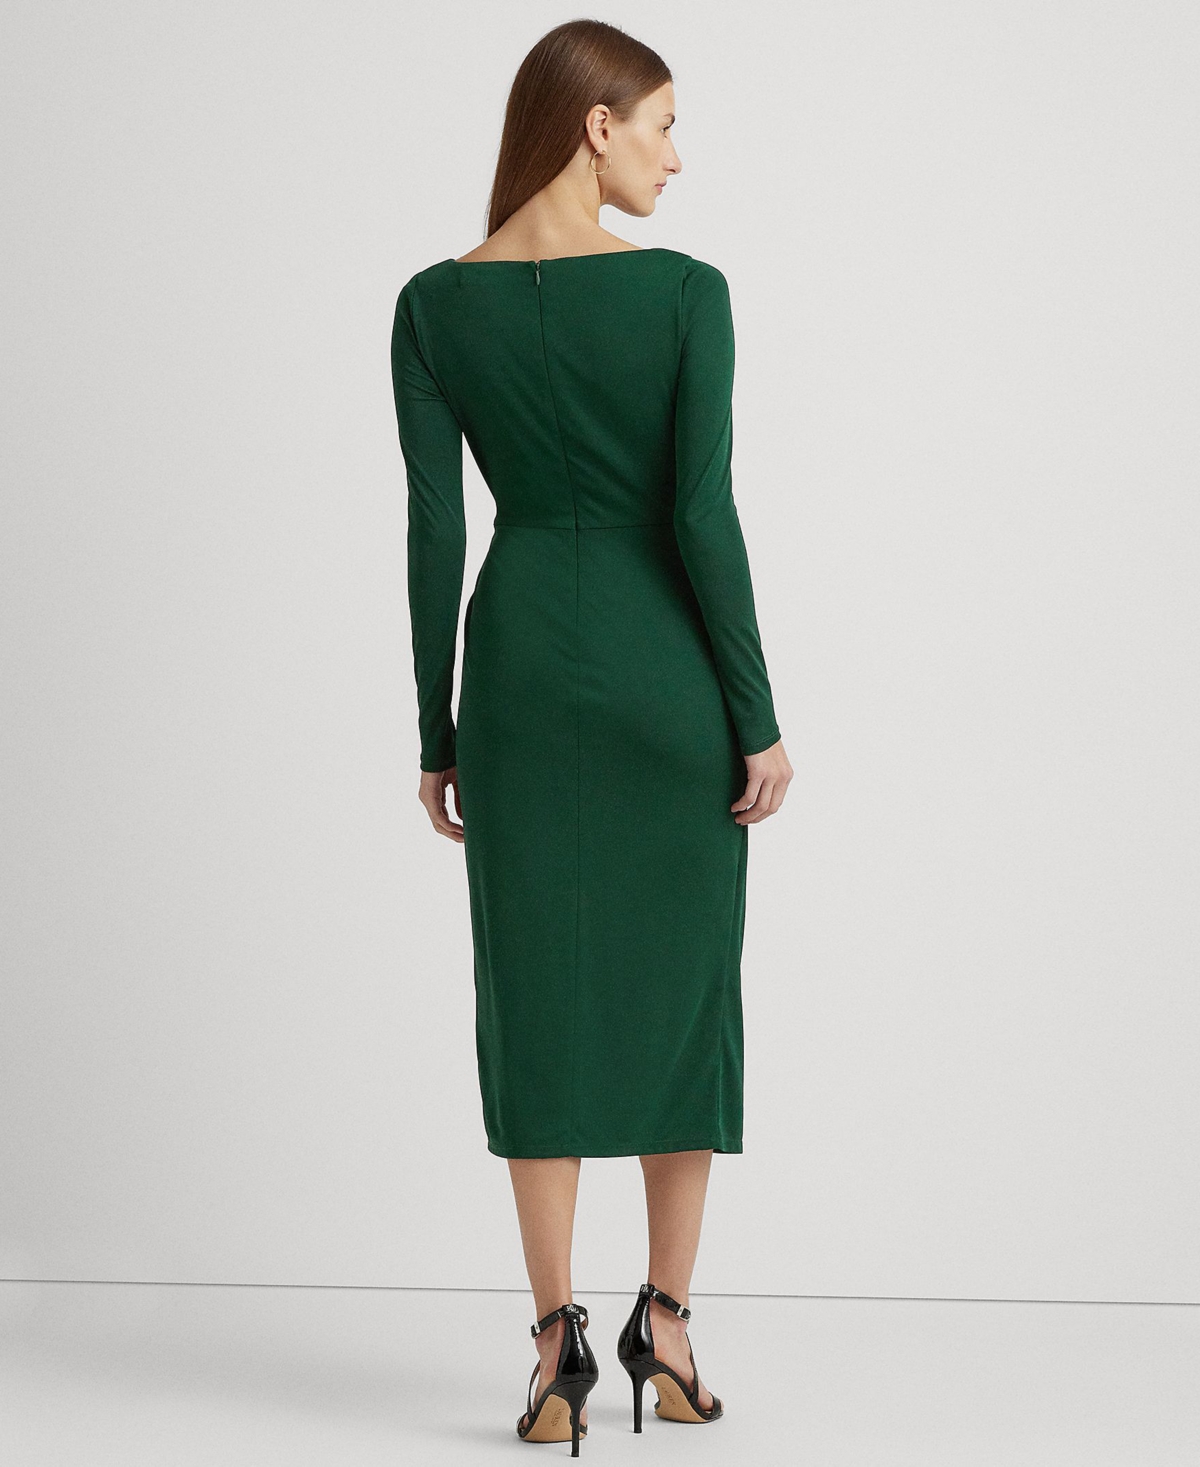 Lauren Ralph Lauren Women's Faux-Wrap Sheath Dress - Season Green